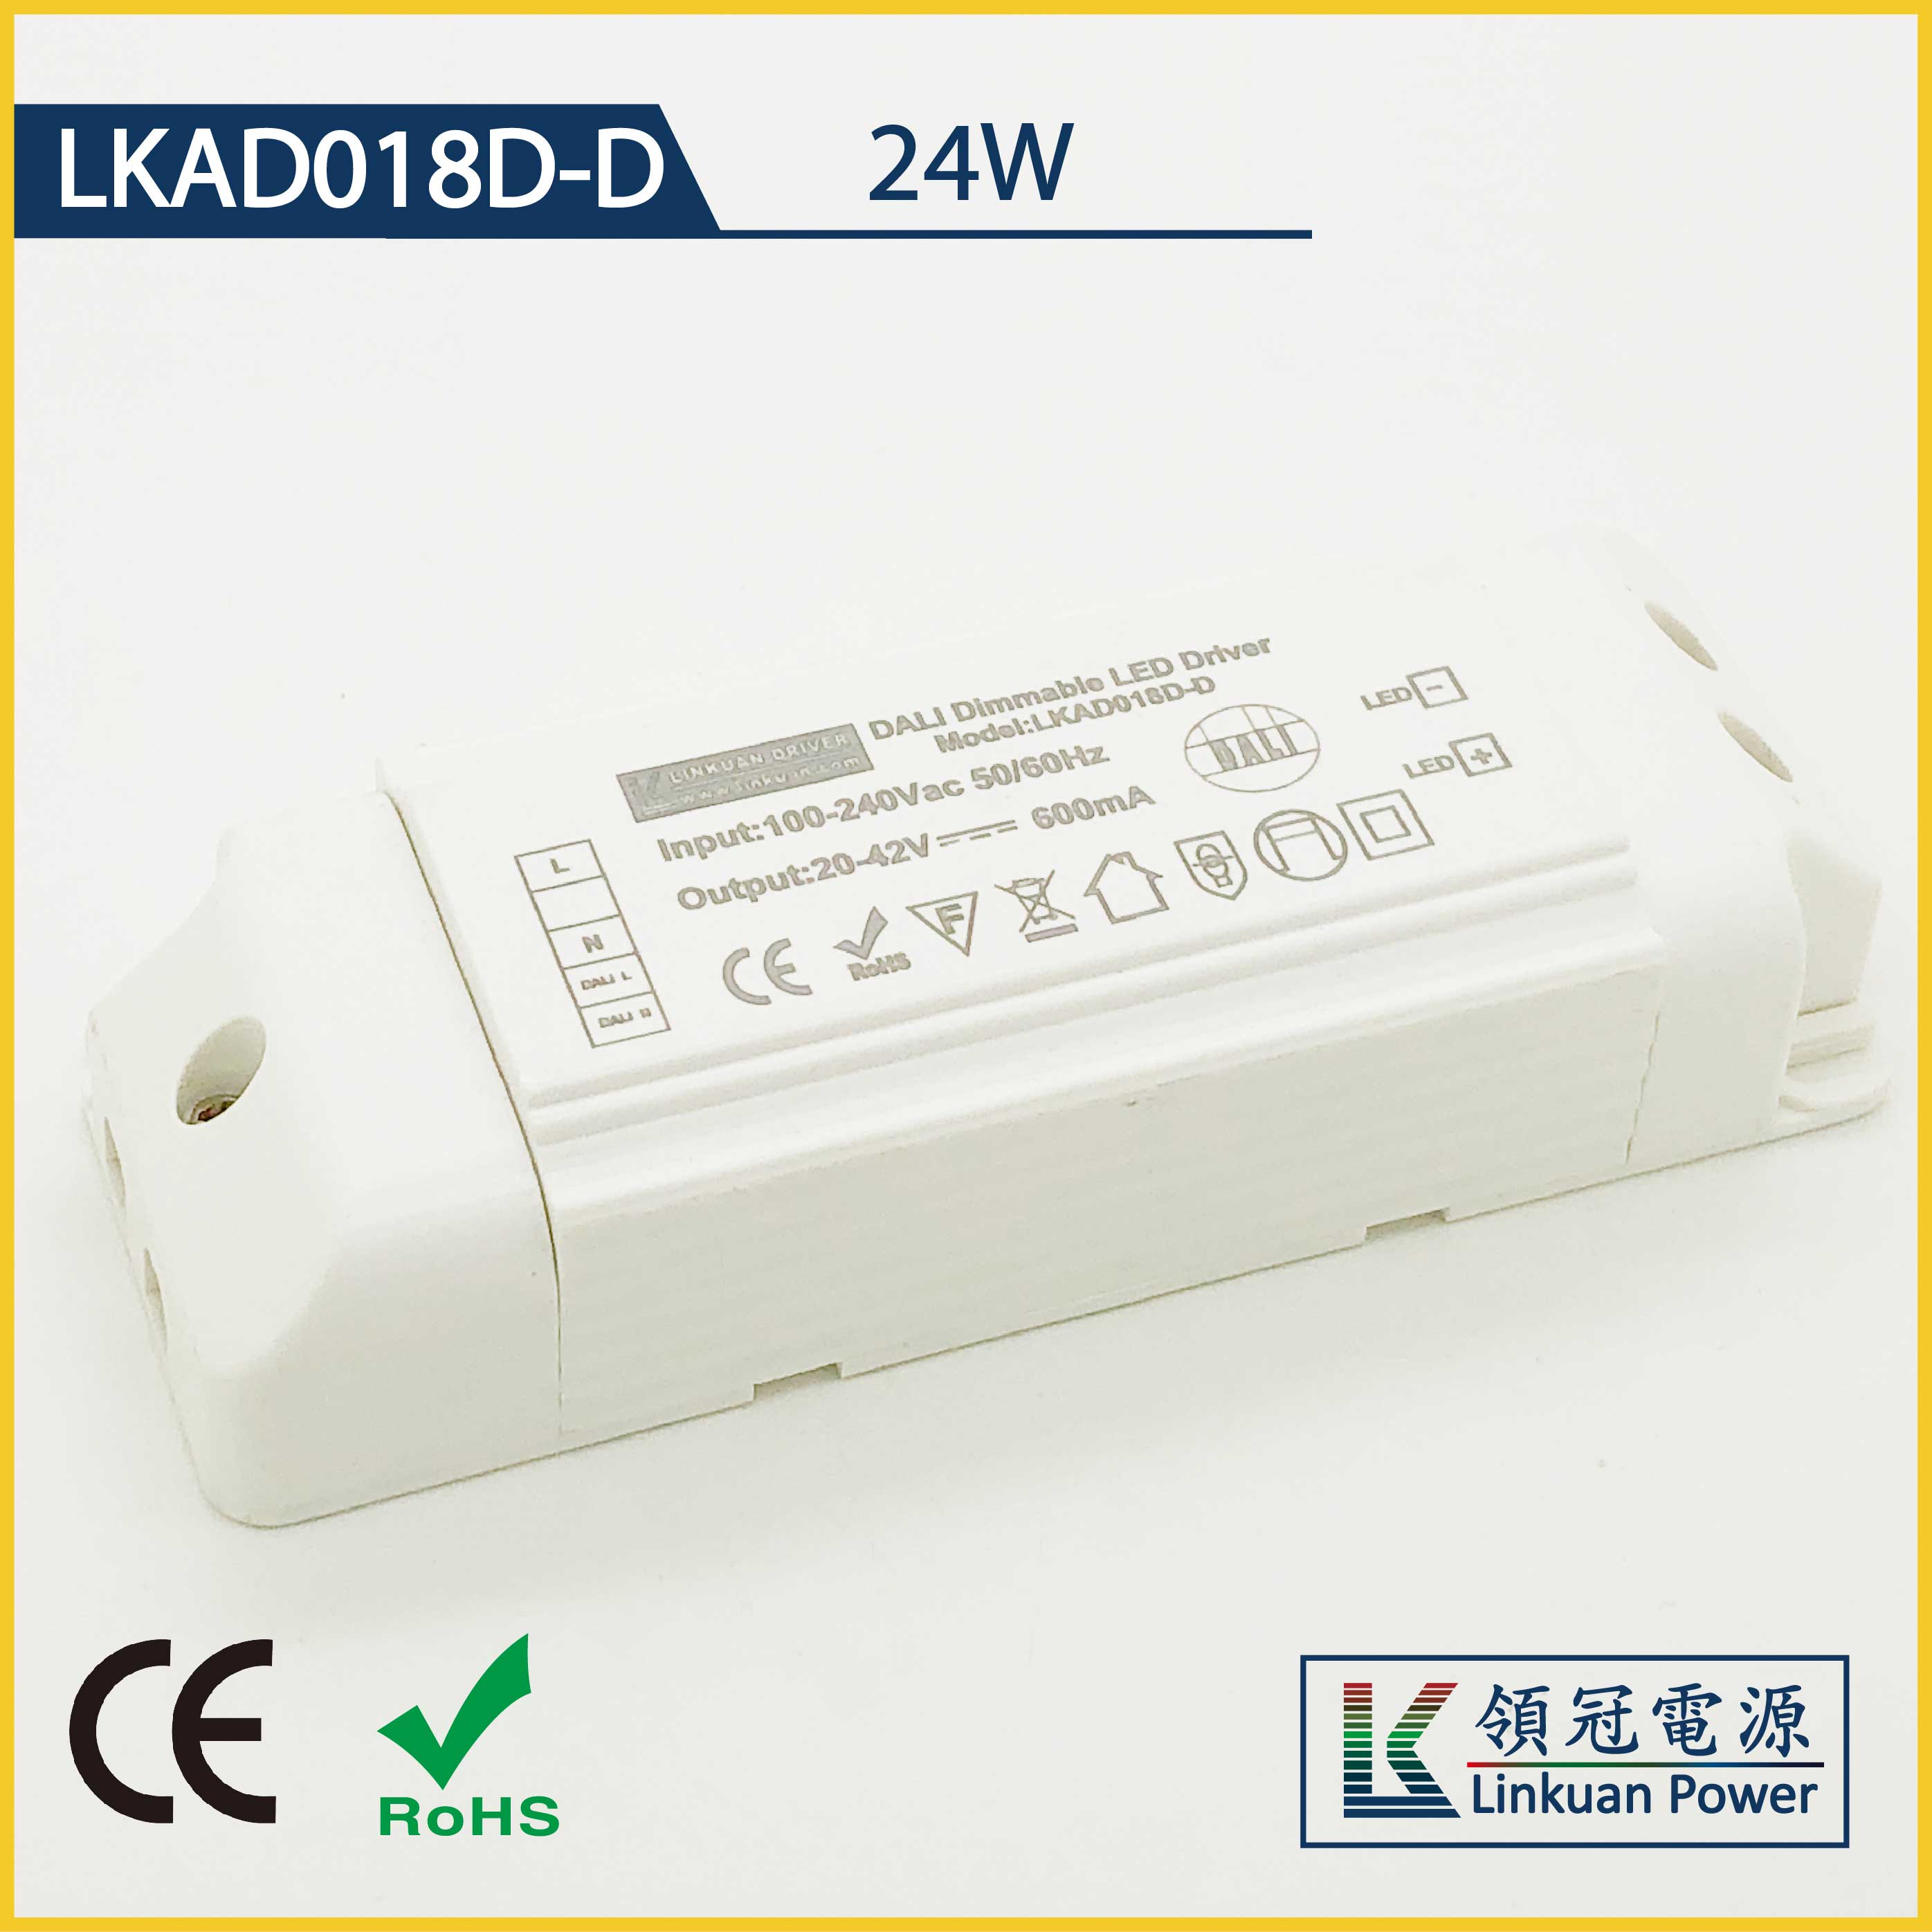 LKAD018D-D 24W 10-42V 600mA DALI Dimming LED drivers